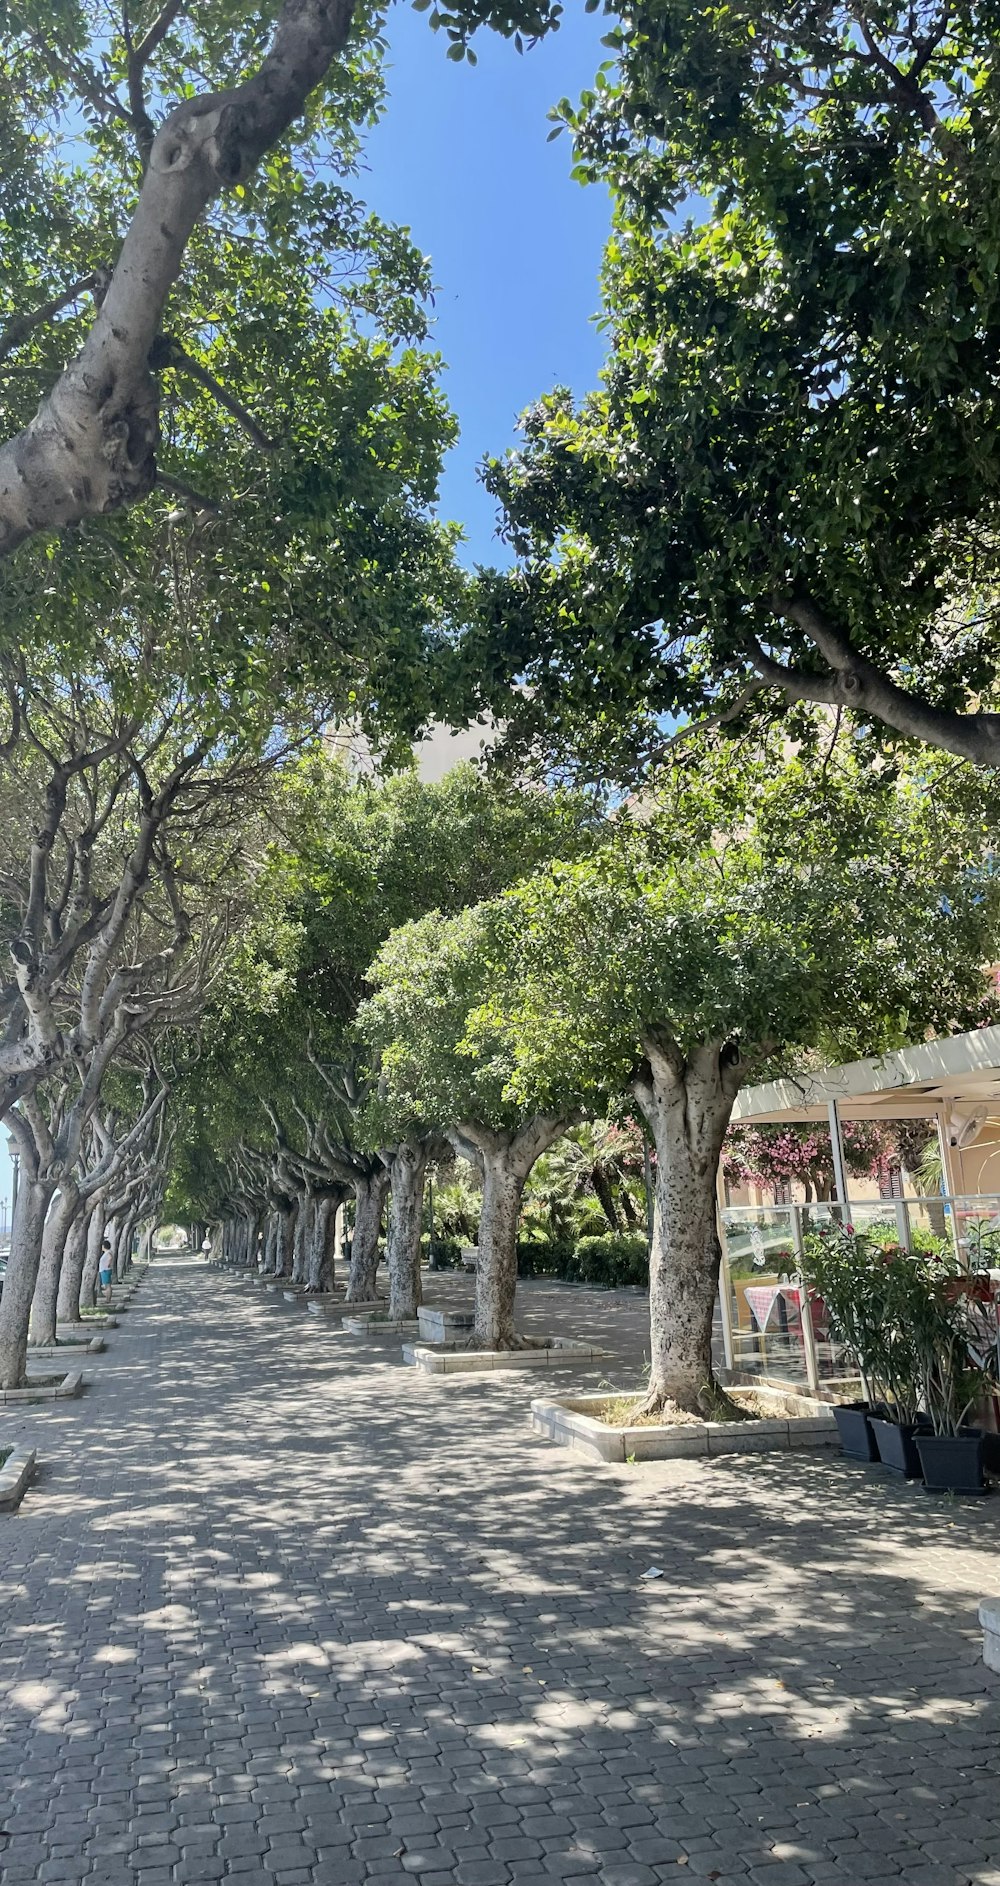 Une rue bordée d’arbres et de bancs sous un ciel bleu